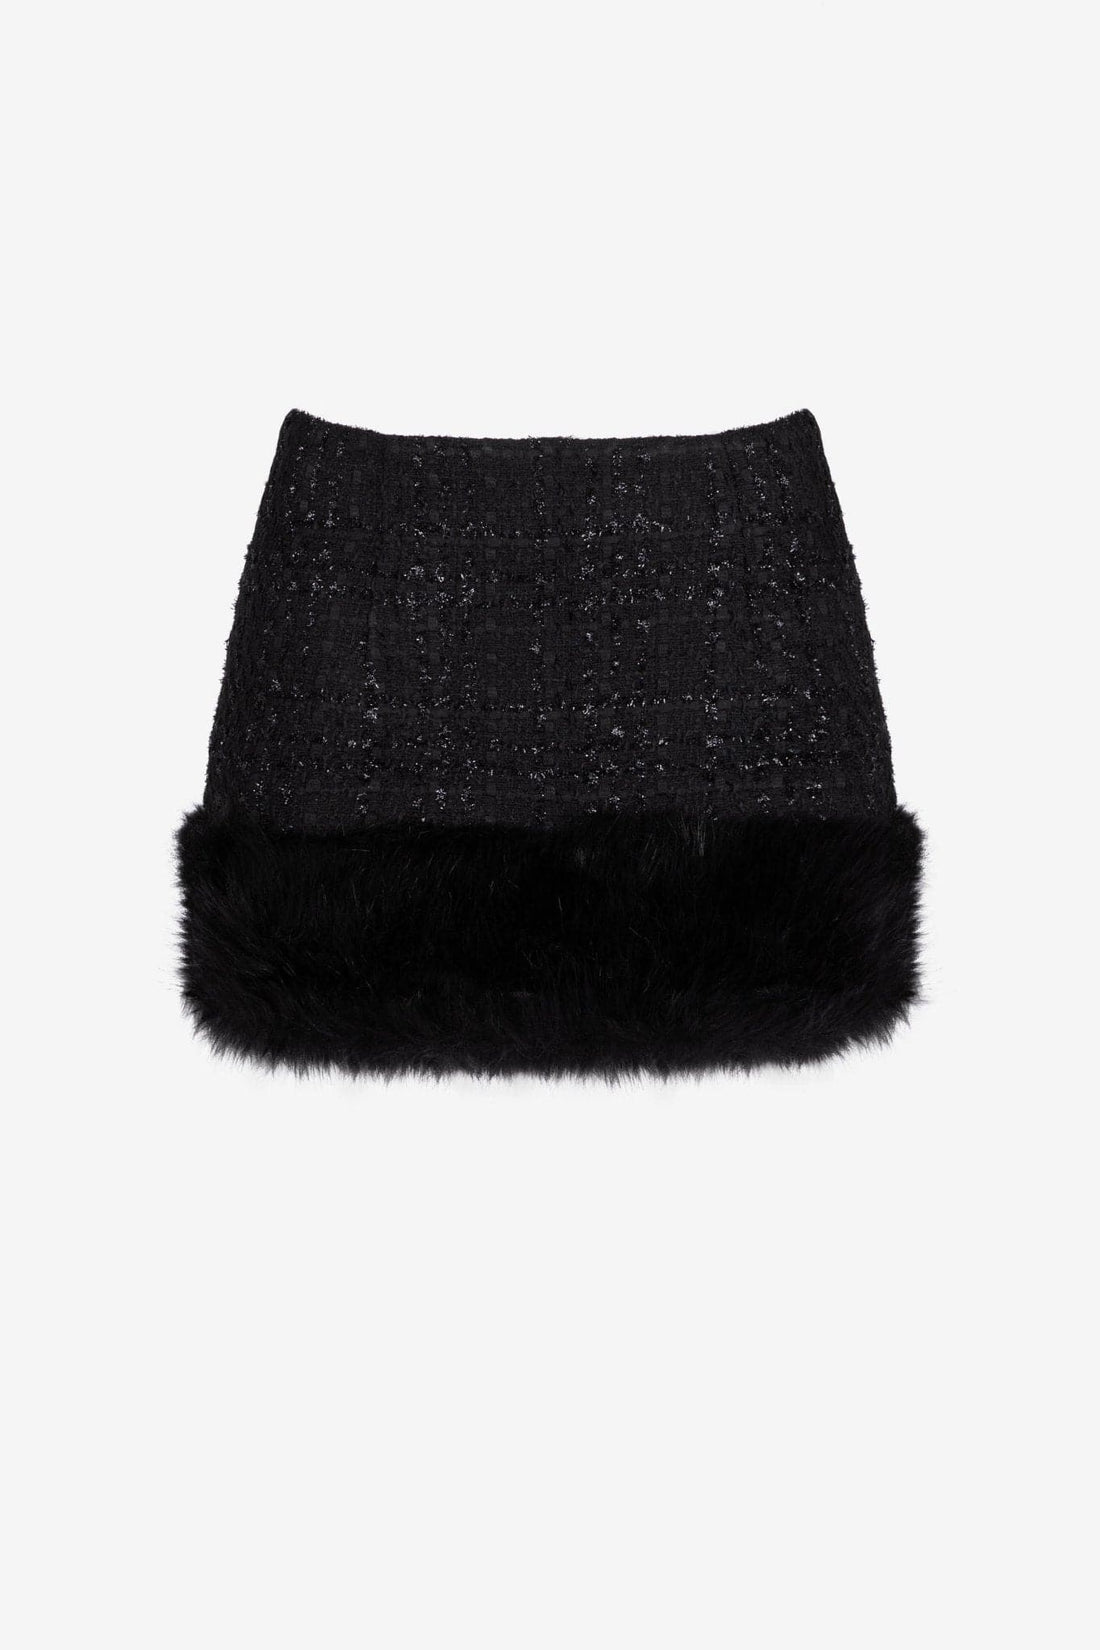 Black low rise tweed mini skirt with fur trim - HEIRESS BEVERLY HILLS